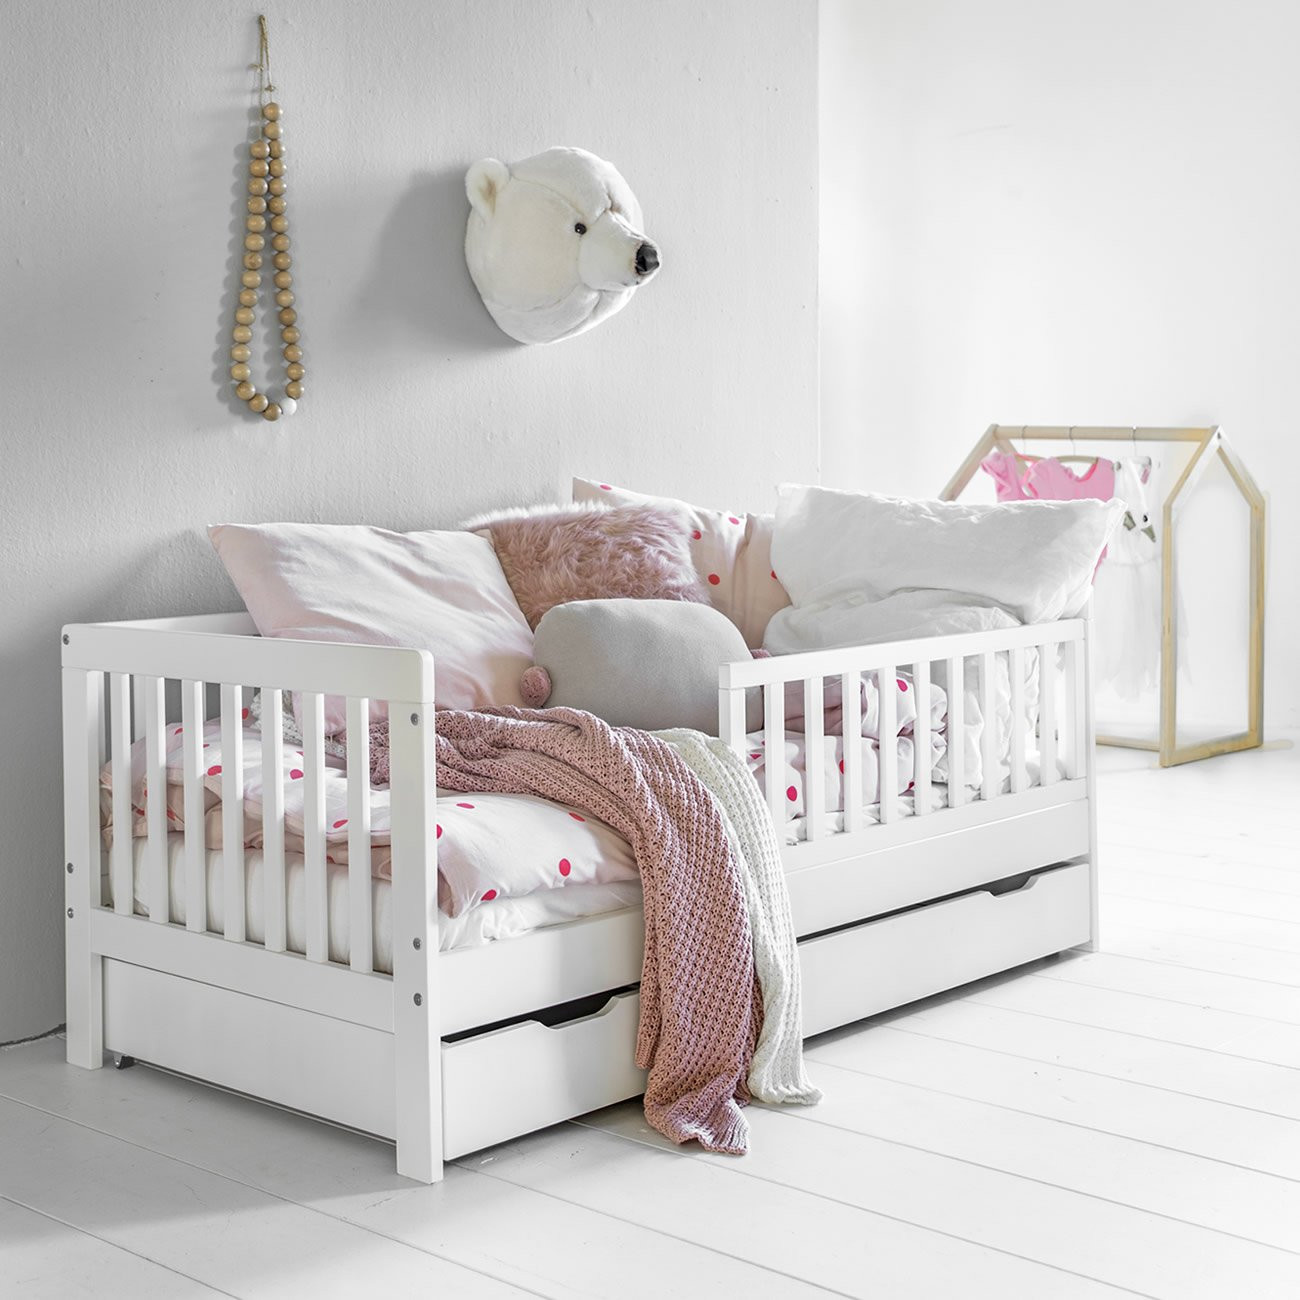 Rent a Toddler bed Plume white? Rent at KeyPro furniture rental!